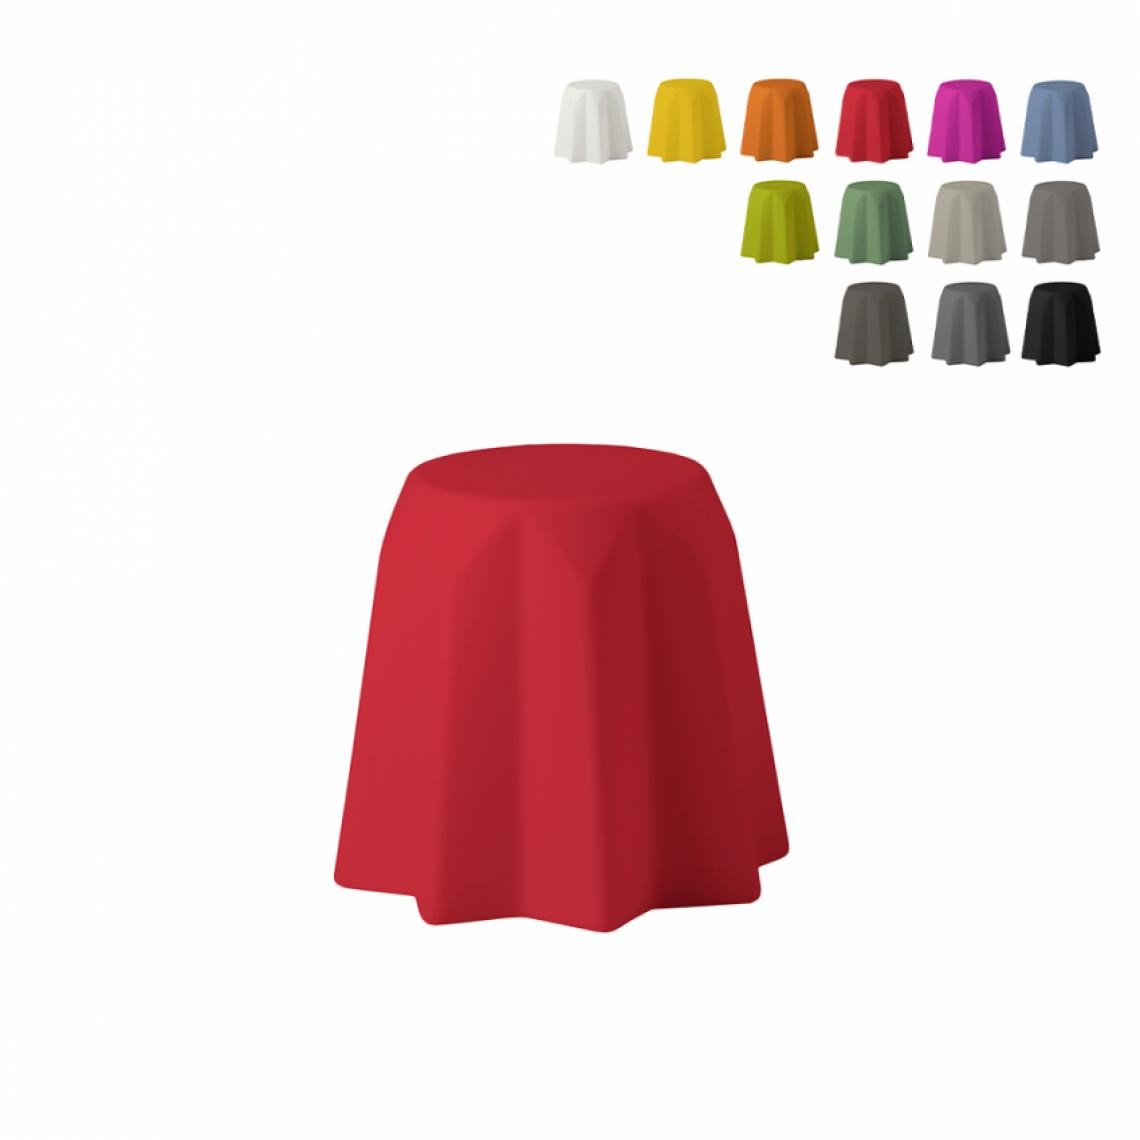 Slide - Tabouret bas polyéthylène au design moderne extravagant Slide Pandoro, Couleur: Rouge - Tabourets